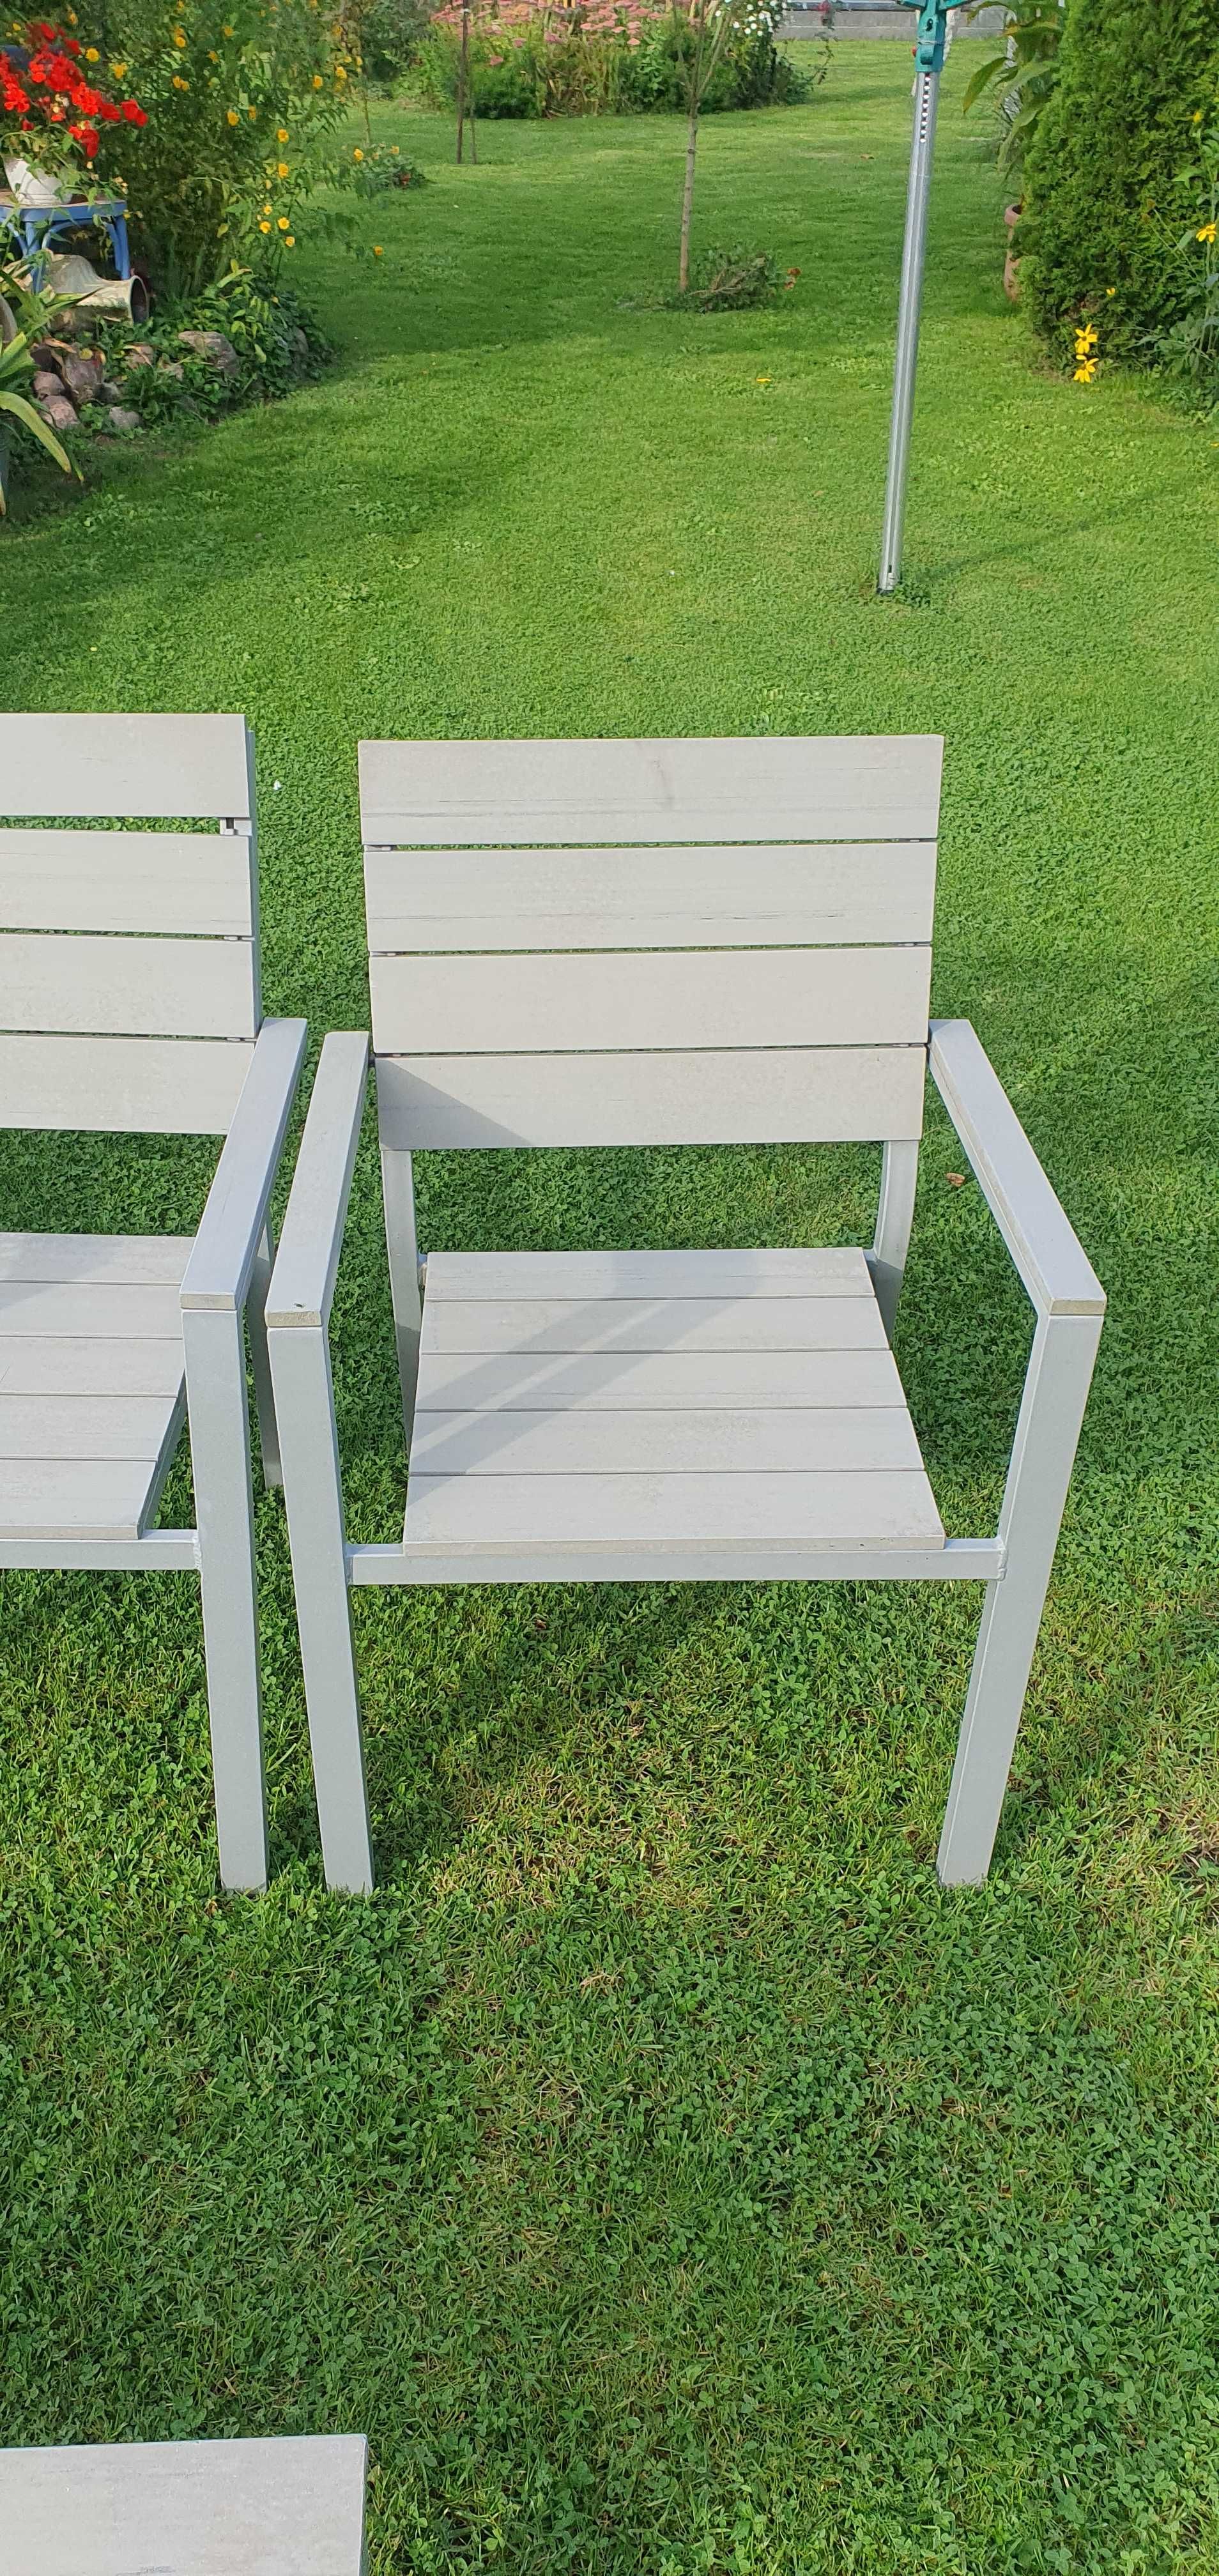 krzesła ogrodowe 4szt + ławka